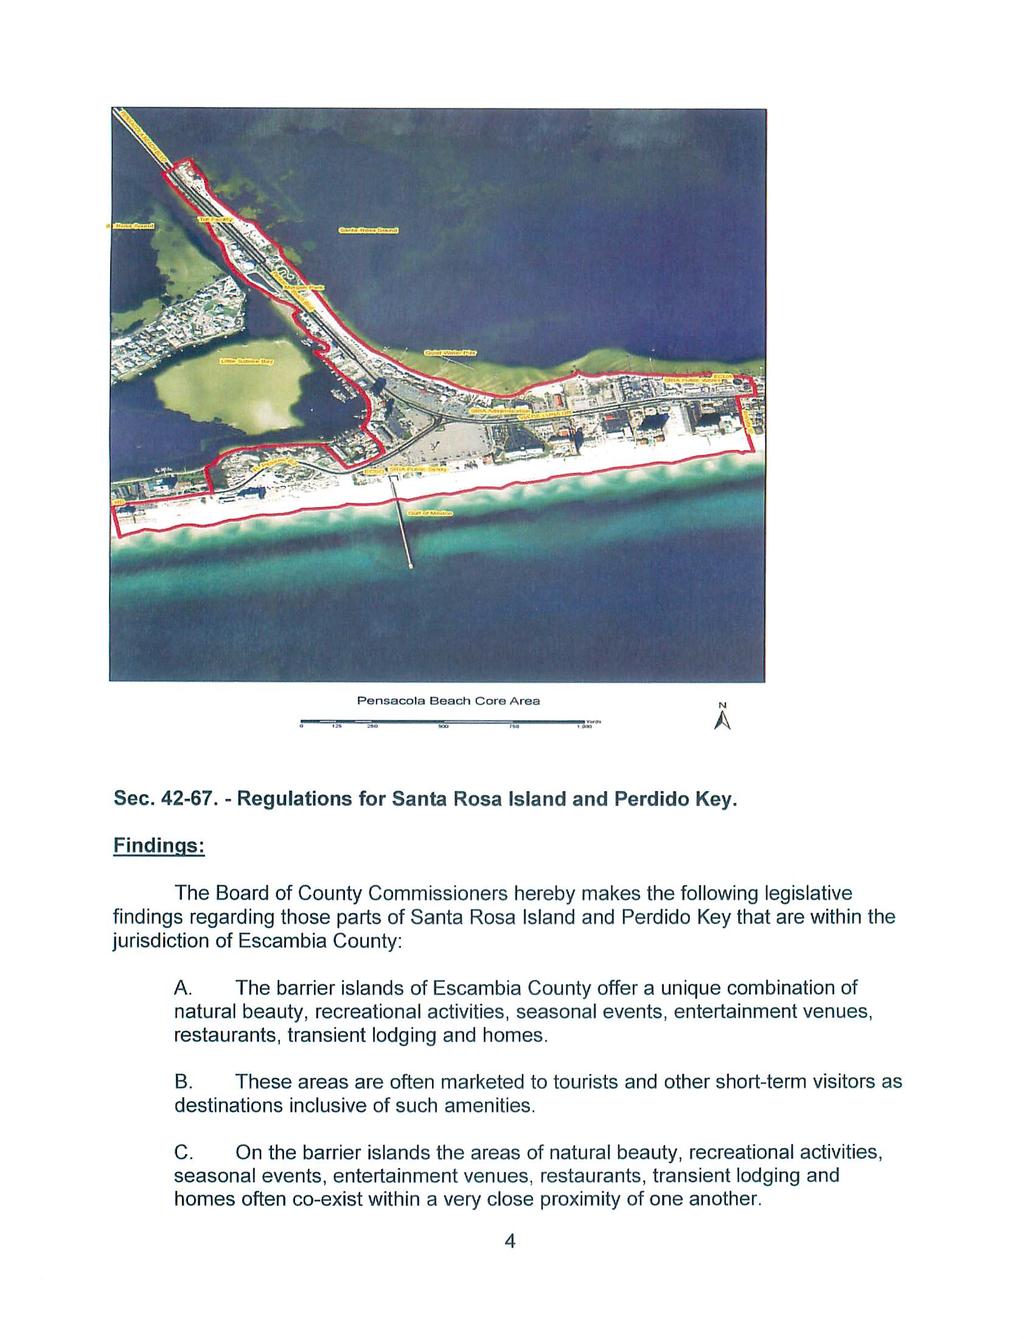 Pensacola Beach Core Area A Sec. 42-67. - Regulations for Santa Rosa Island and Perdido Key.